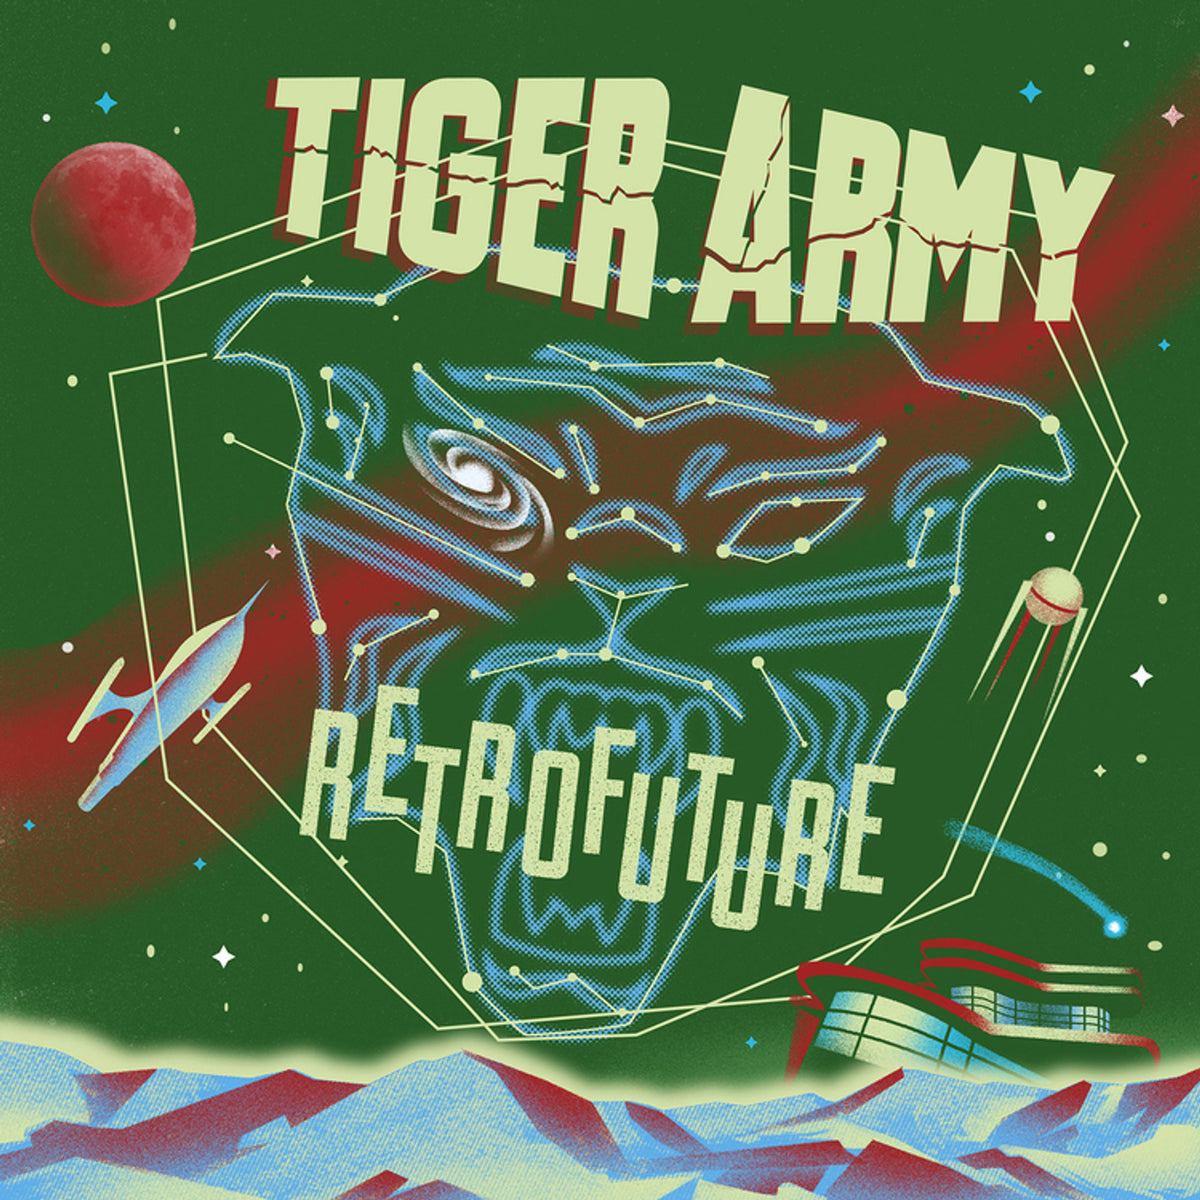 tiger army logo